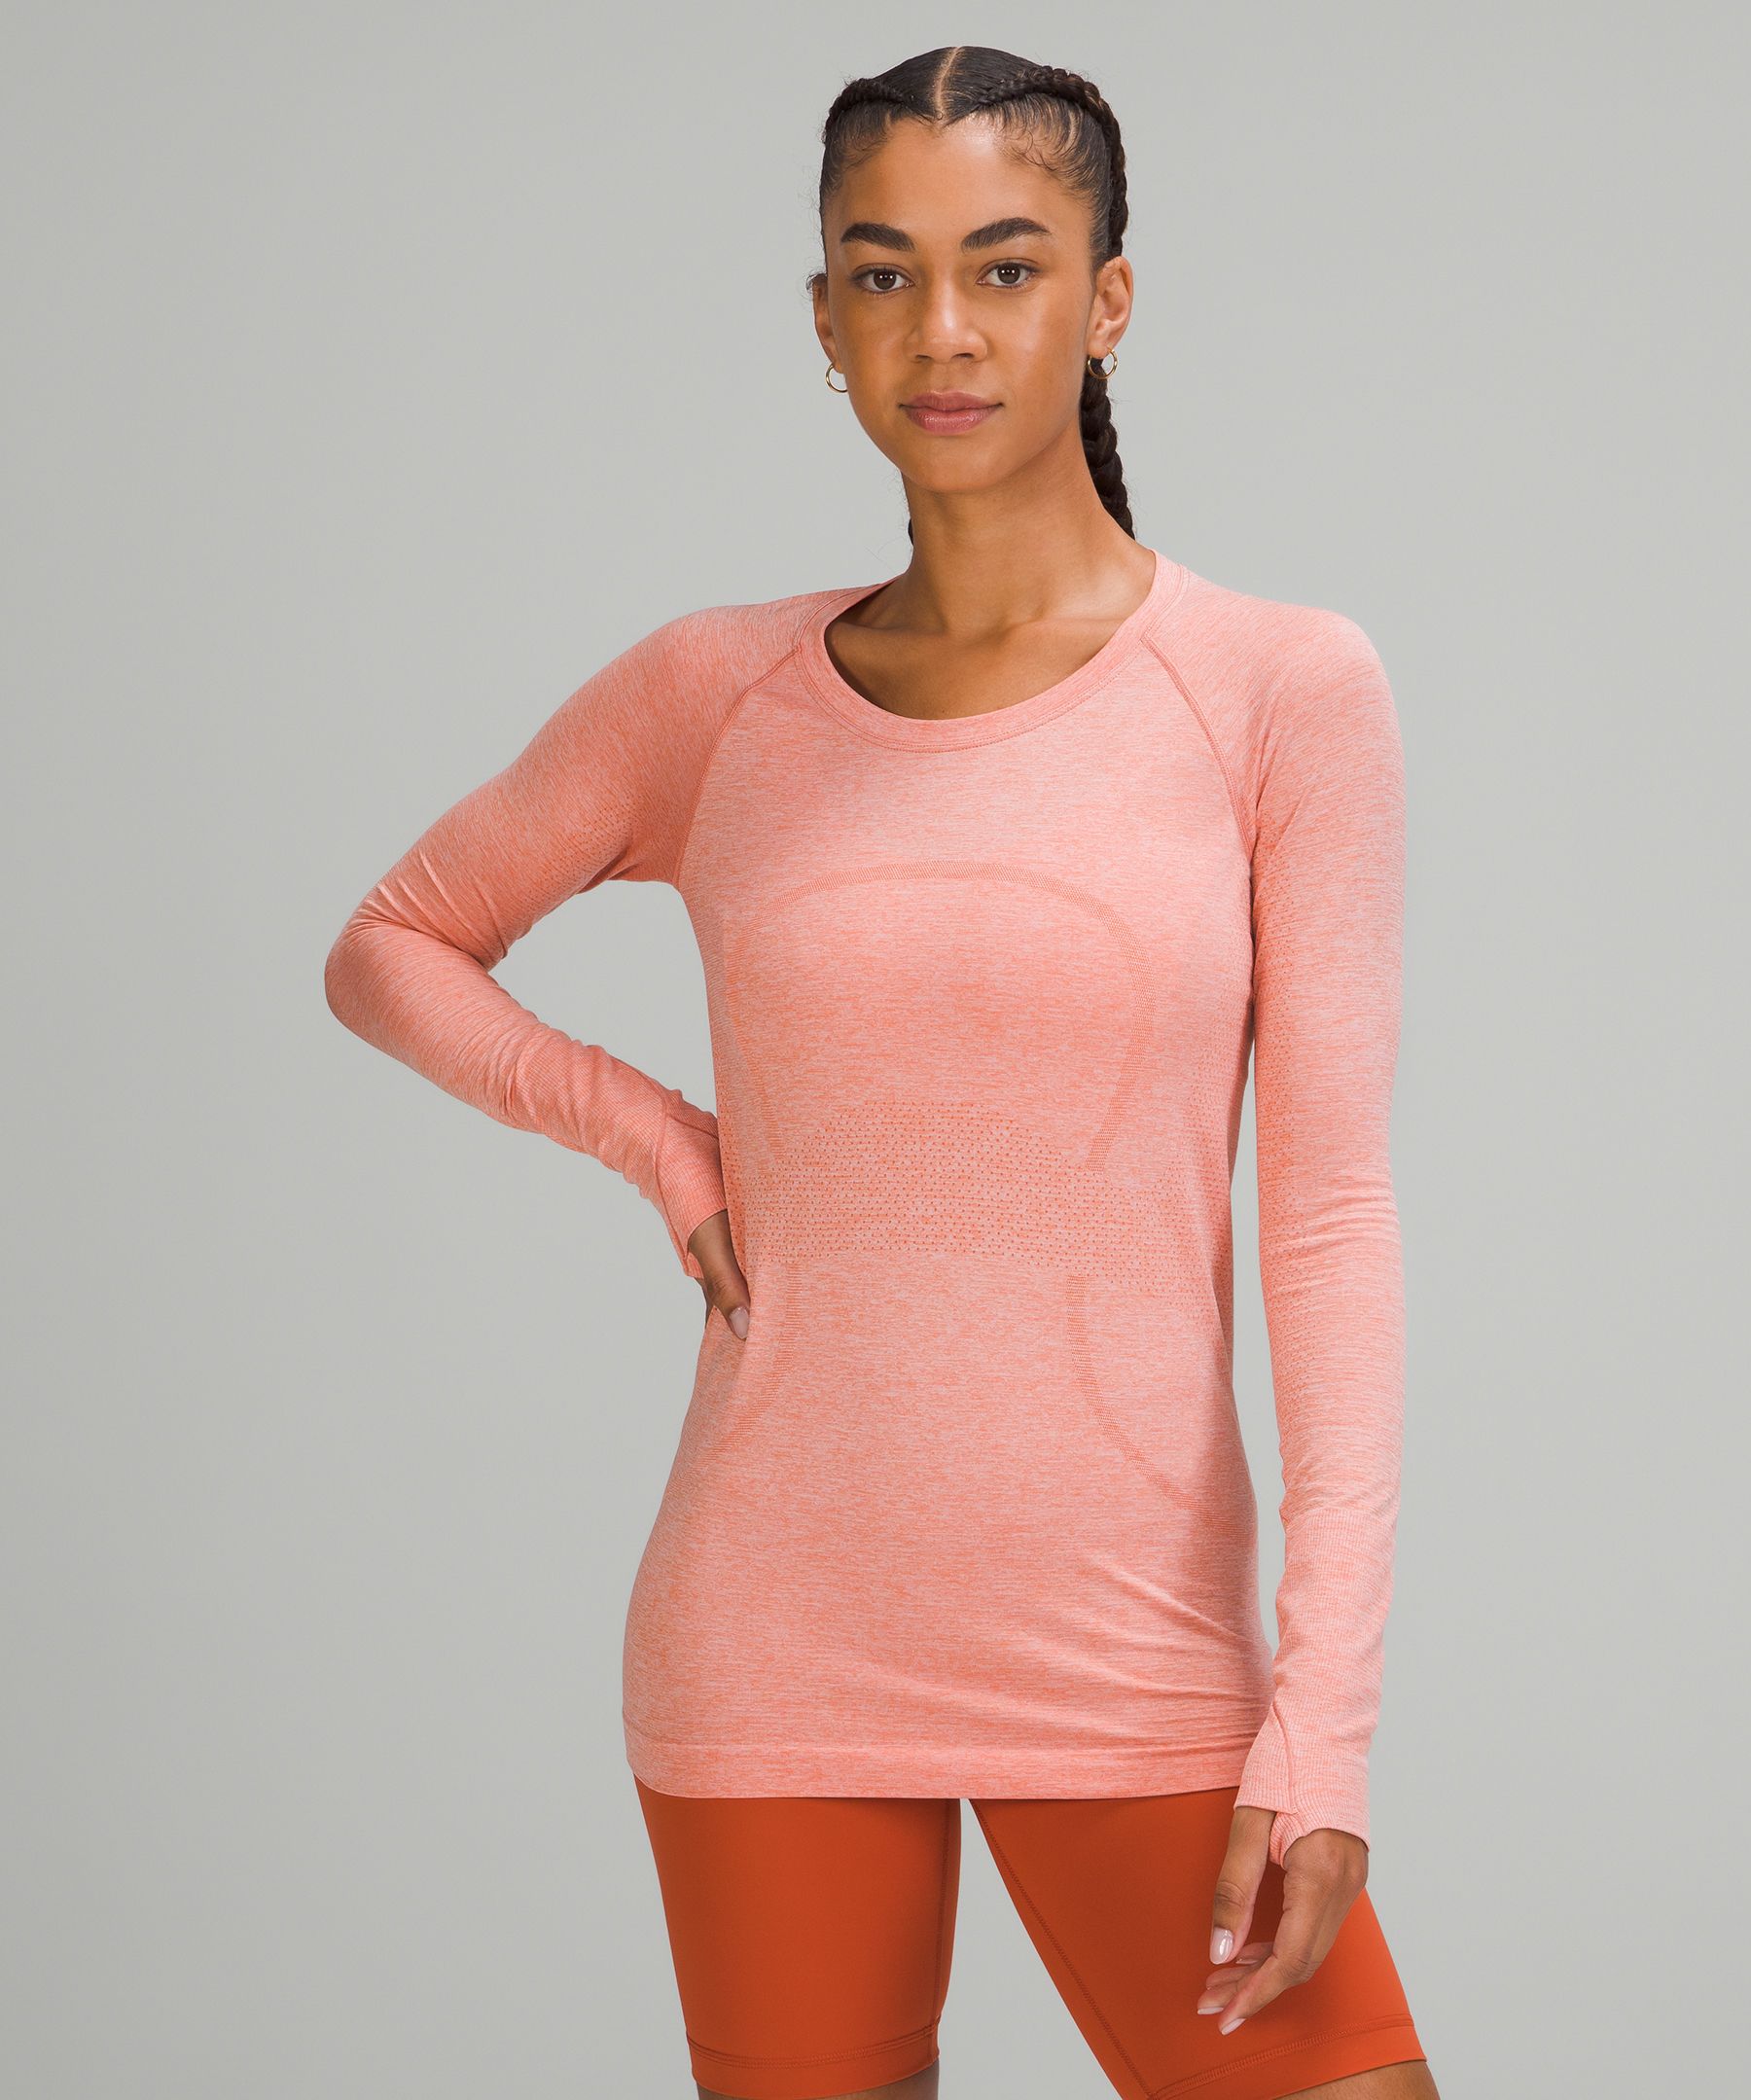 Lululemon Swiftly Tech Long Sleeve Shirt 2.0 In Pink Savannah/pink Mist